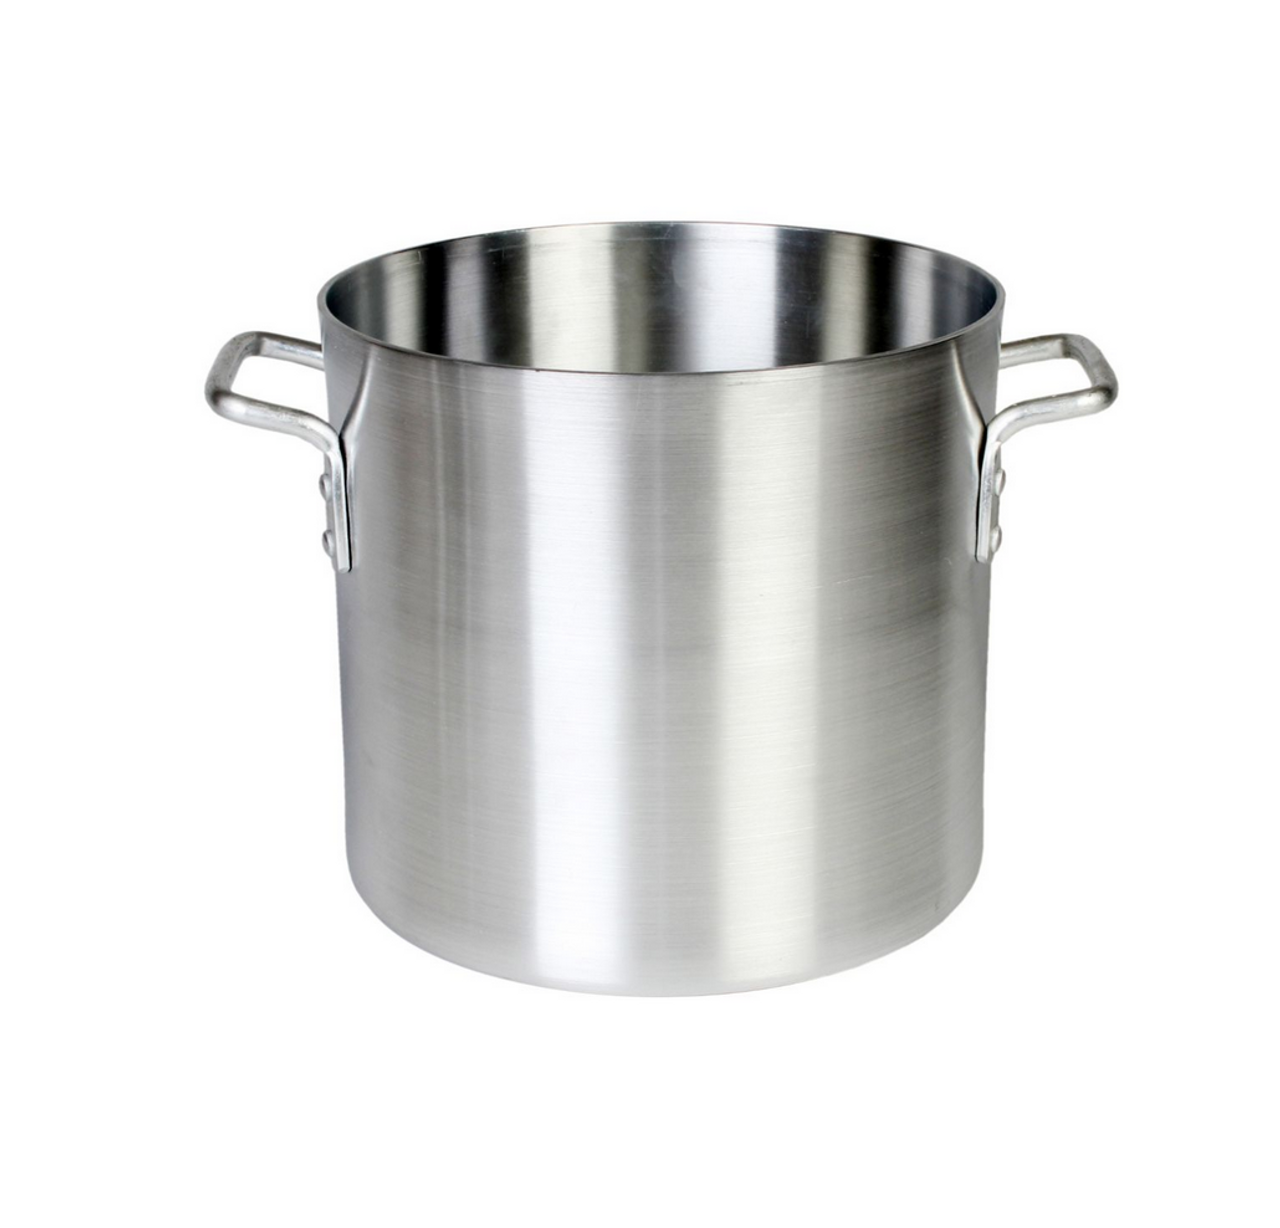 Aluminum Stock Pot-24 Qt. Standard Weight 